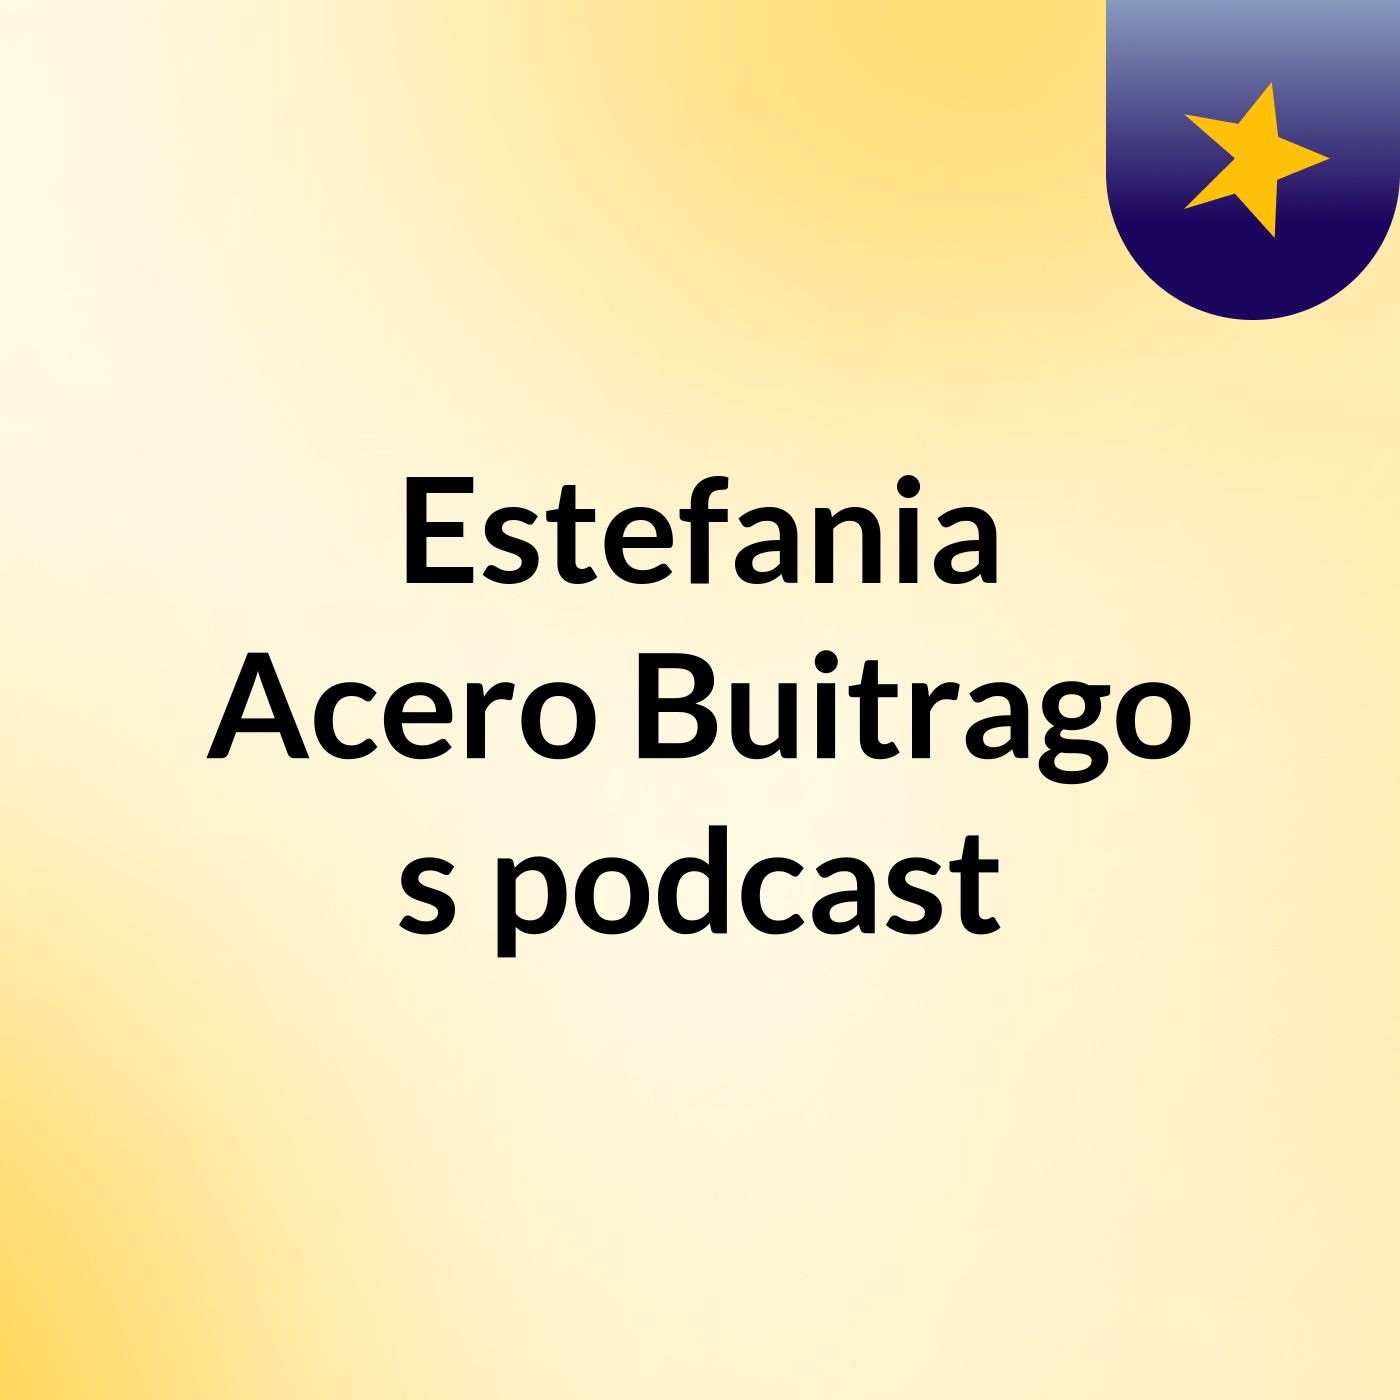 Estefania Acero Buitrago's podcast